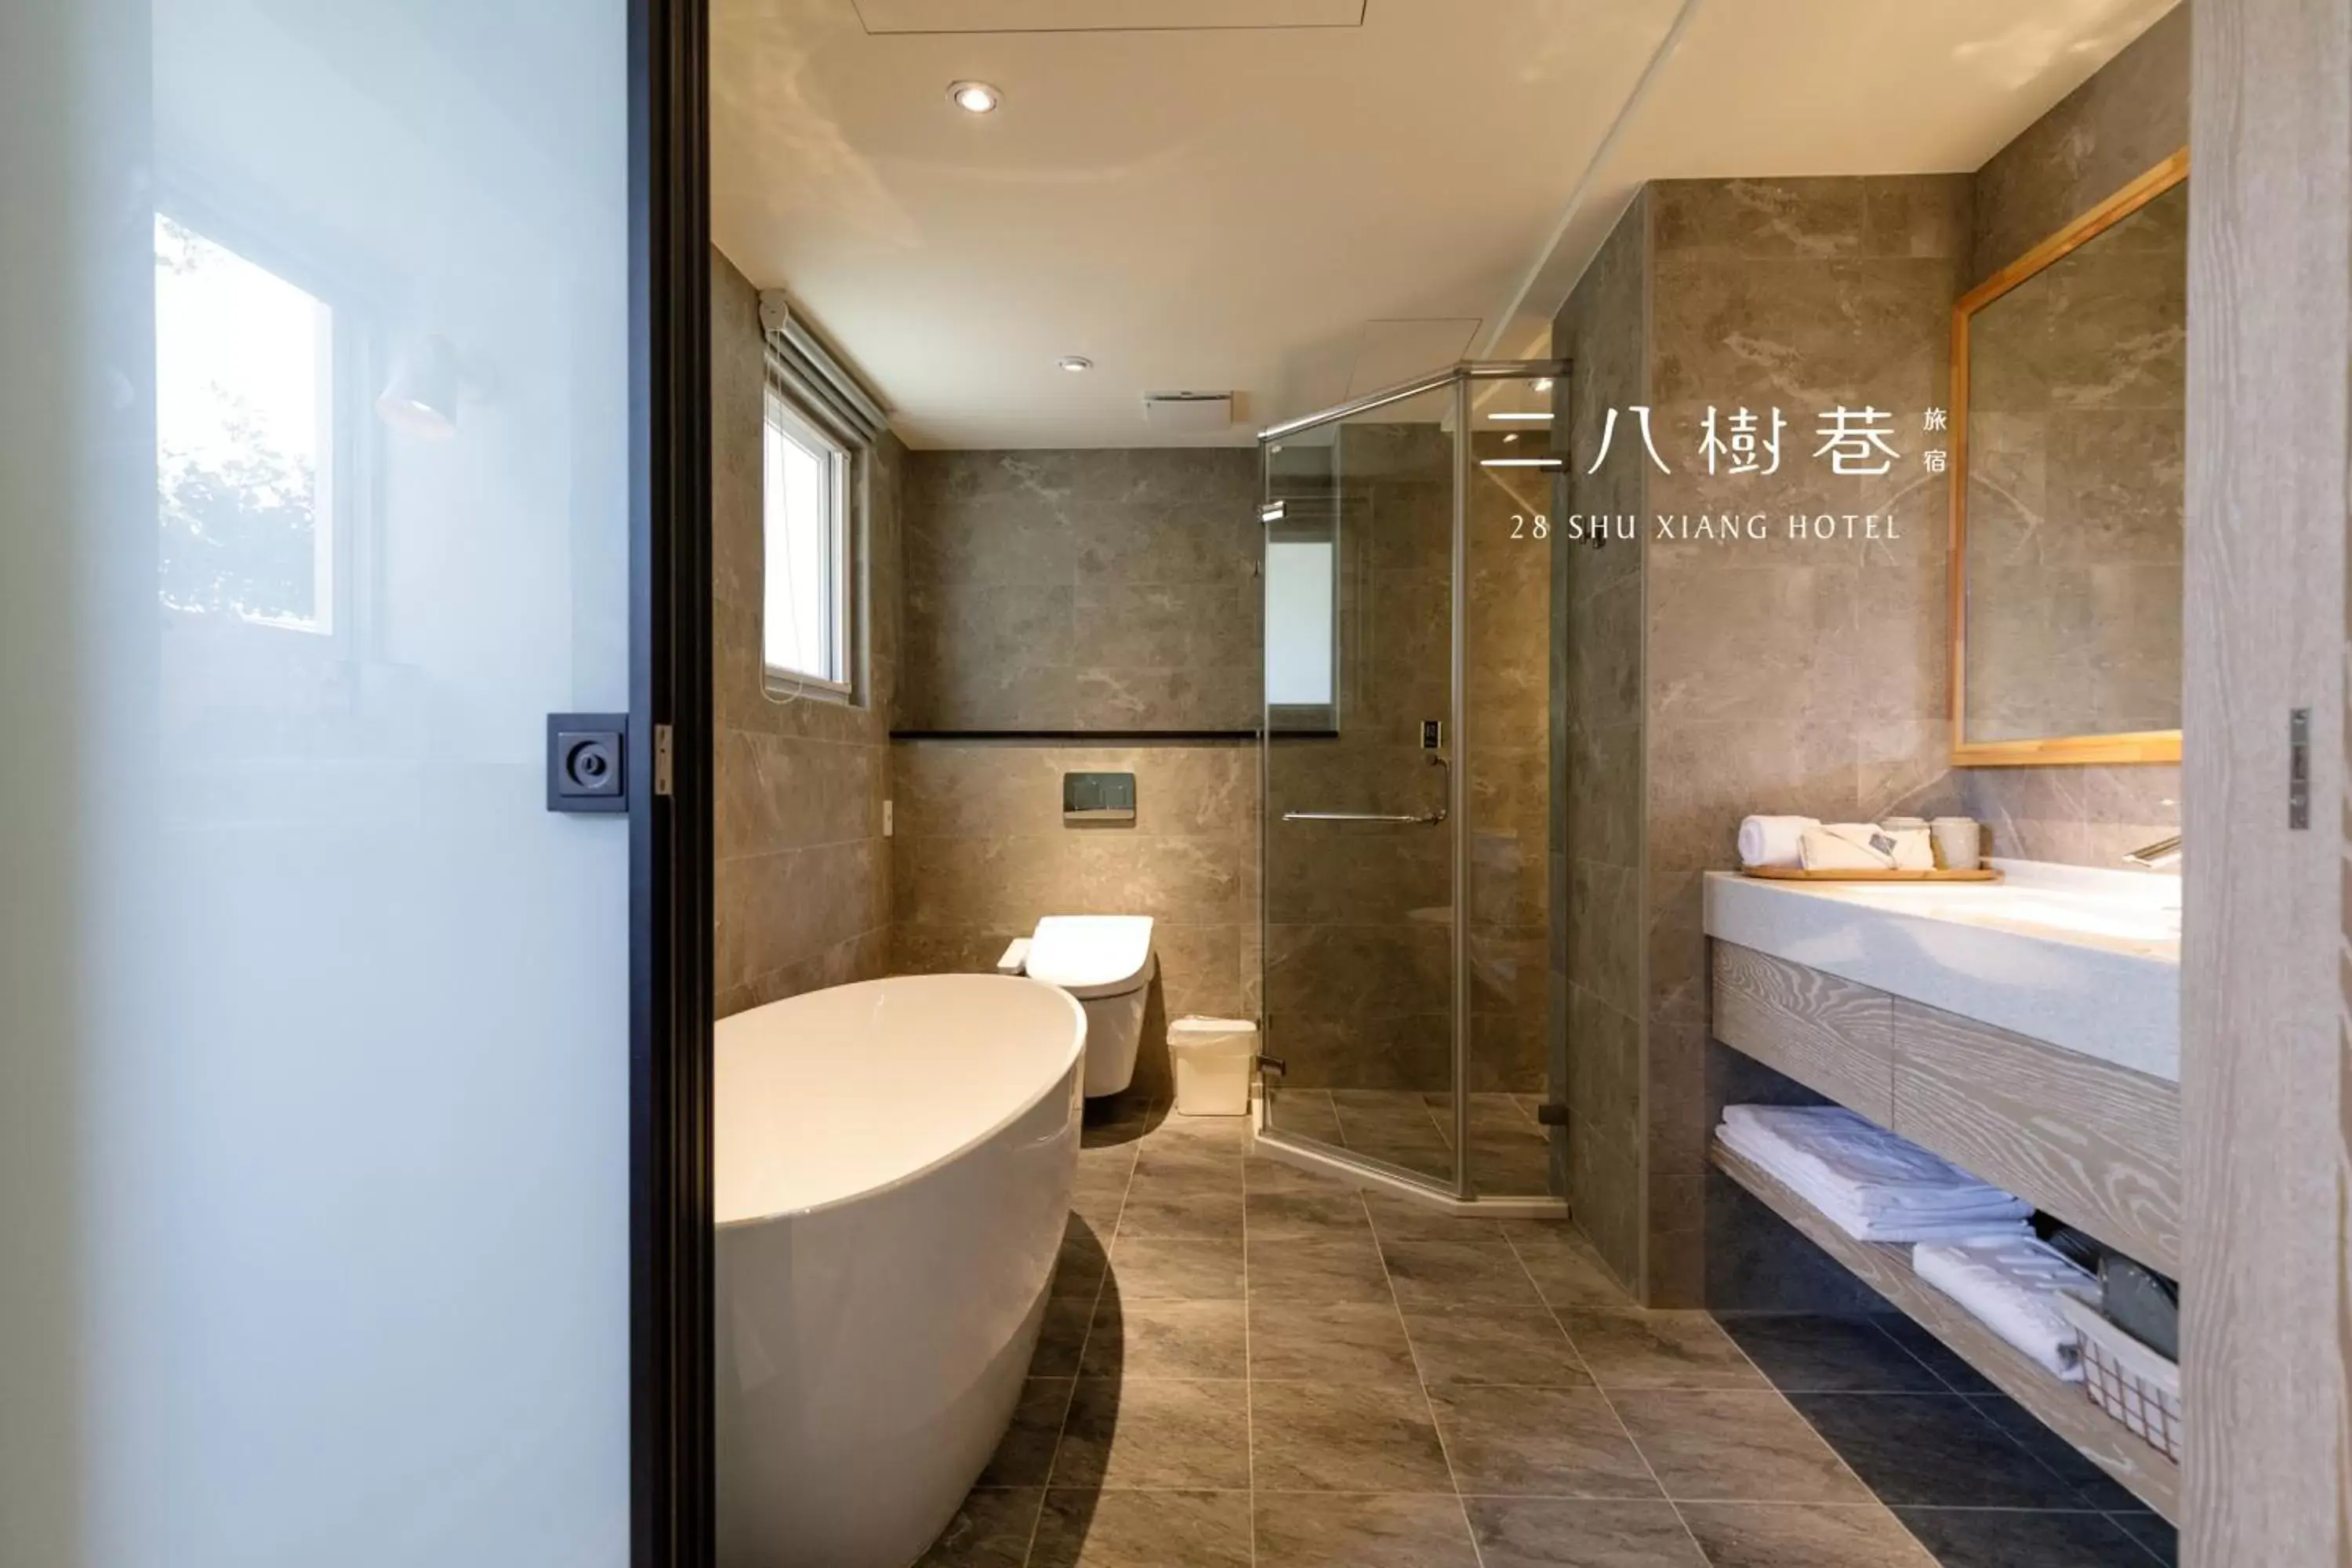 Toilet, Bathroom in 28 Shu Xiang Hotel